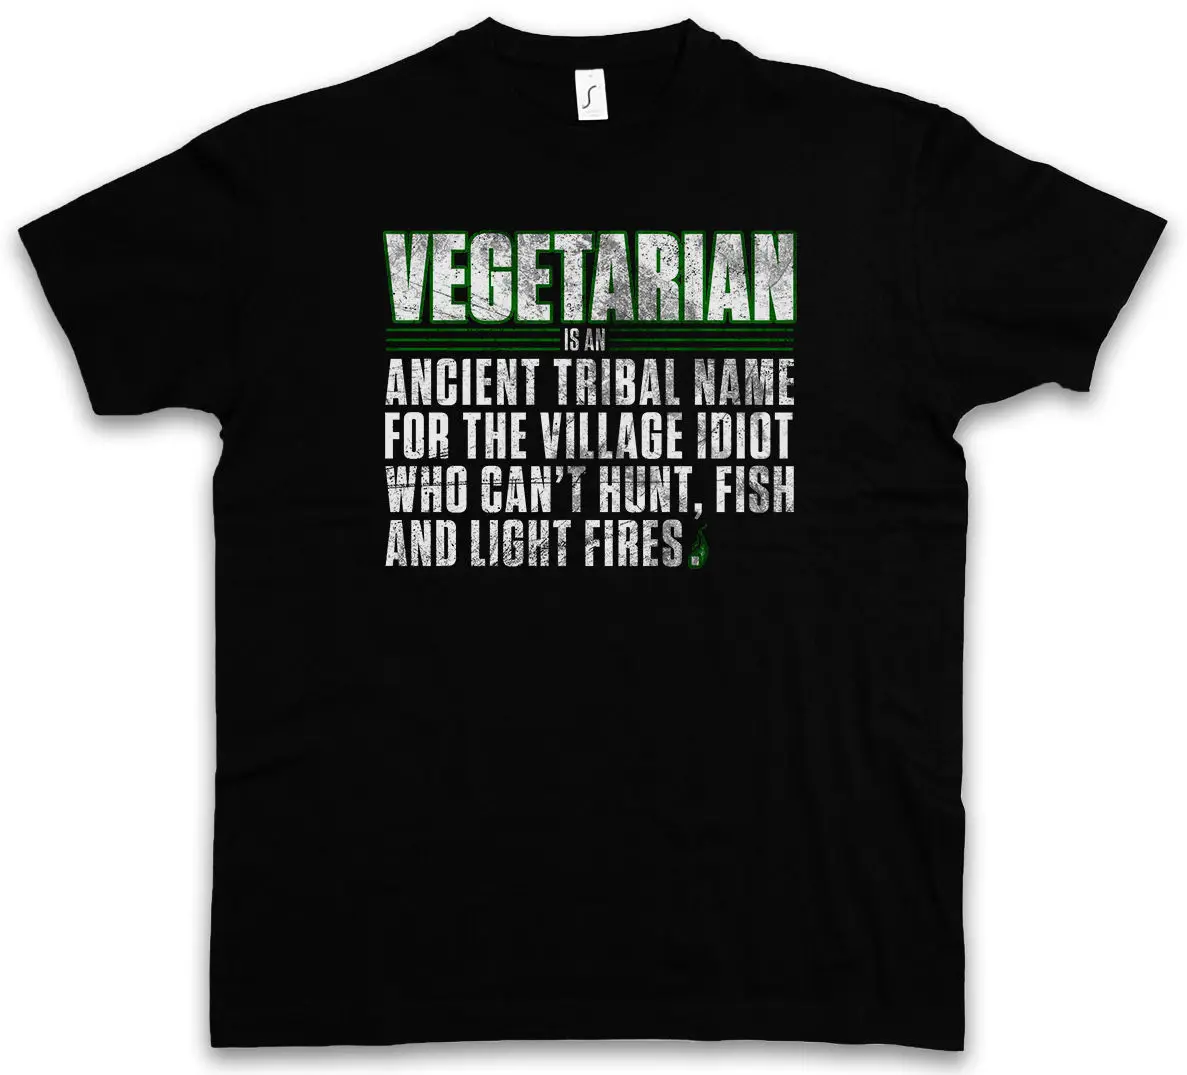 

2019 New Short Sleeve Casual Top Tee 100% Cotton Shirt Vegetarian T-Shirt Ancient Name Fun Vegan Vegetarian Shirts For Sale